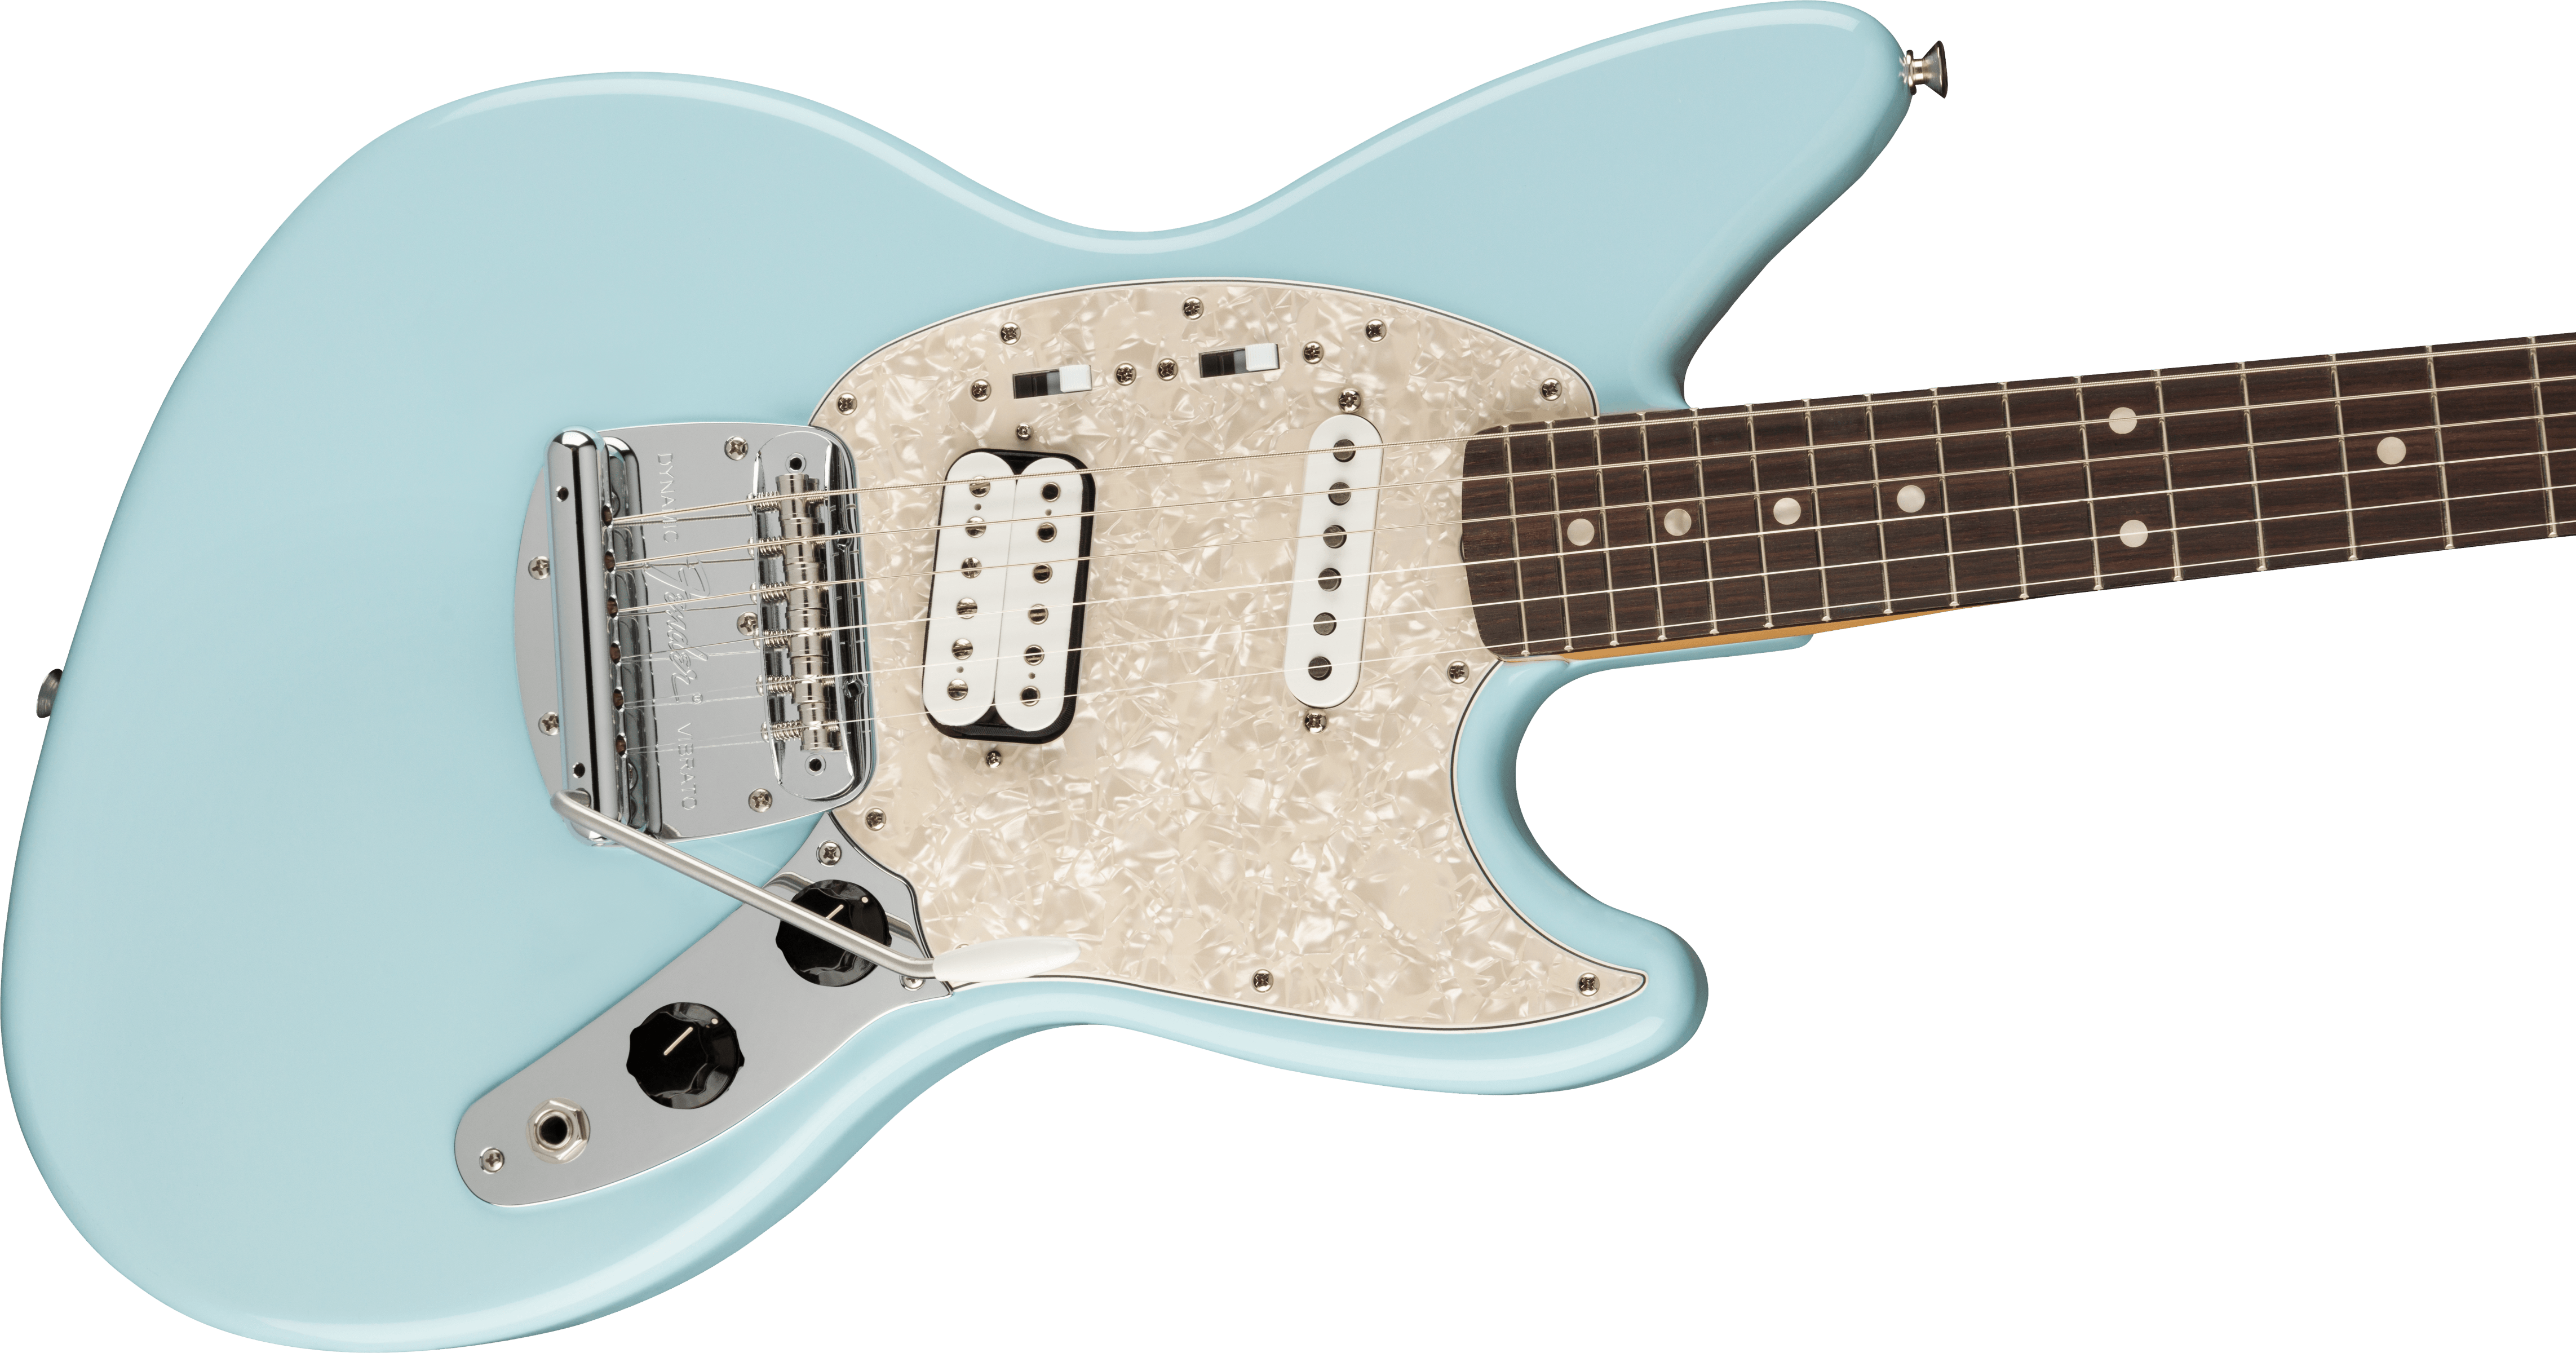 Fender Jag-stang Kurt Cobain Artist Hs Trem Rw - Sonic Blue - Retro rock electric guitar - Variation 3